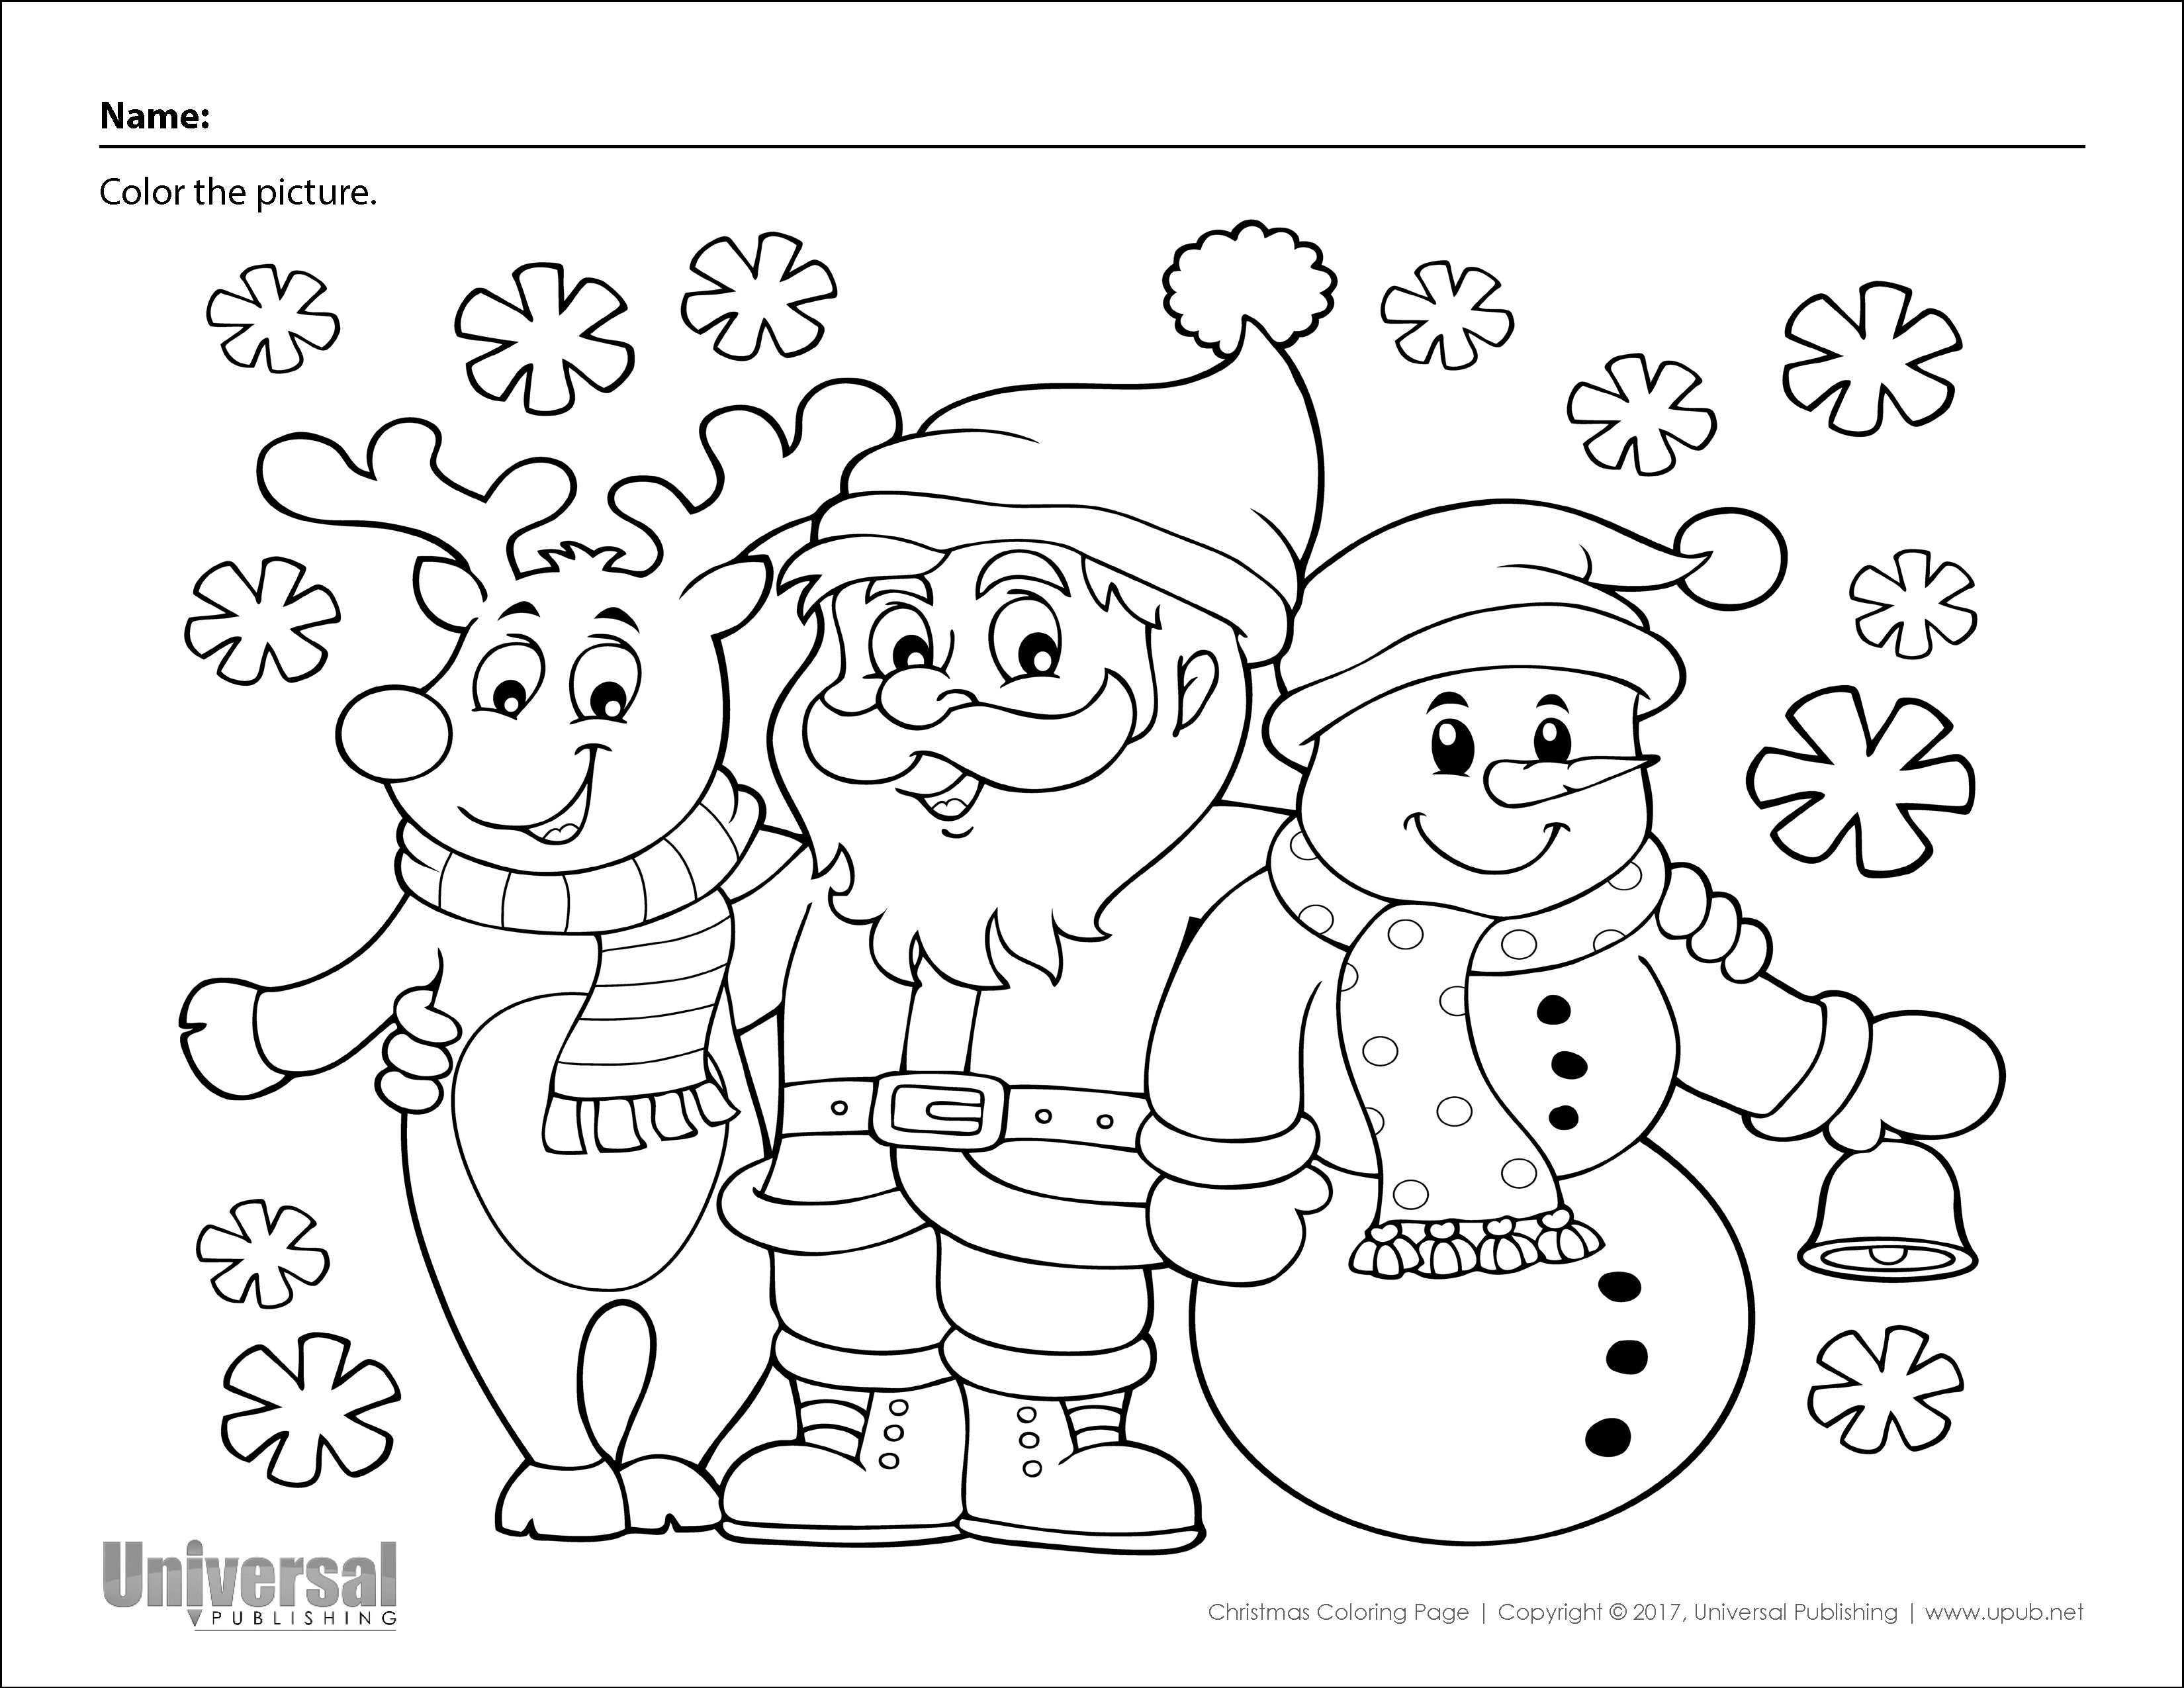 Christmas Coloring Page Santa Reindeer Snowman - Universal Publishing Blog